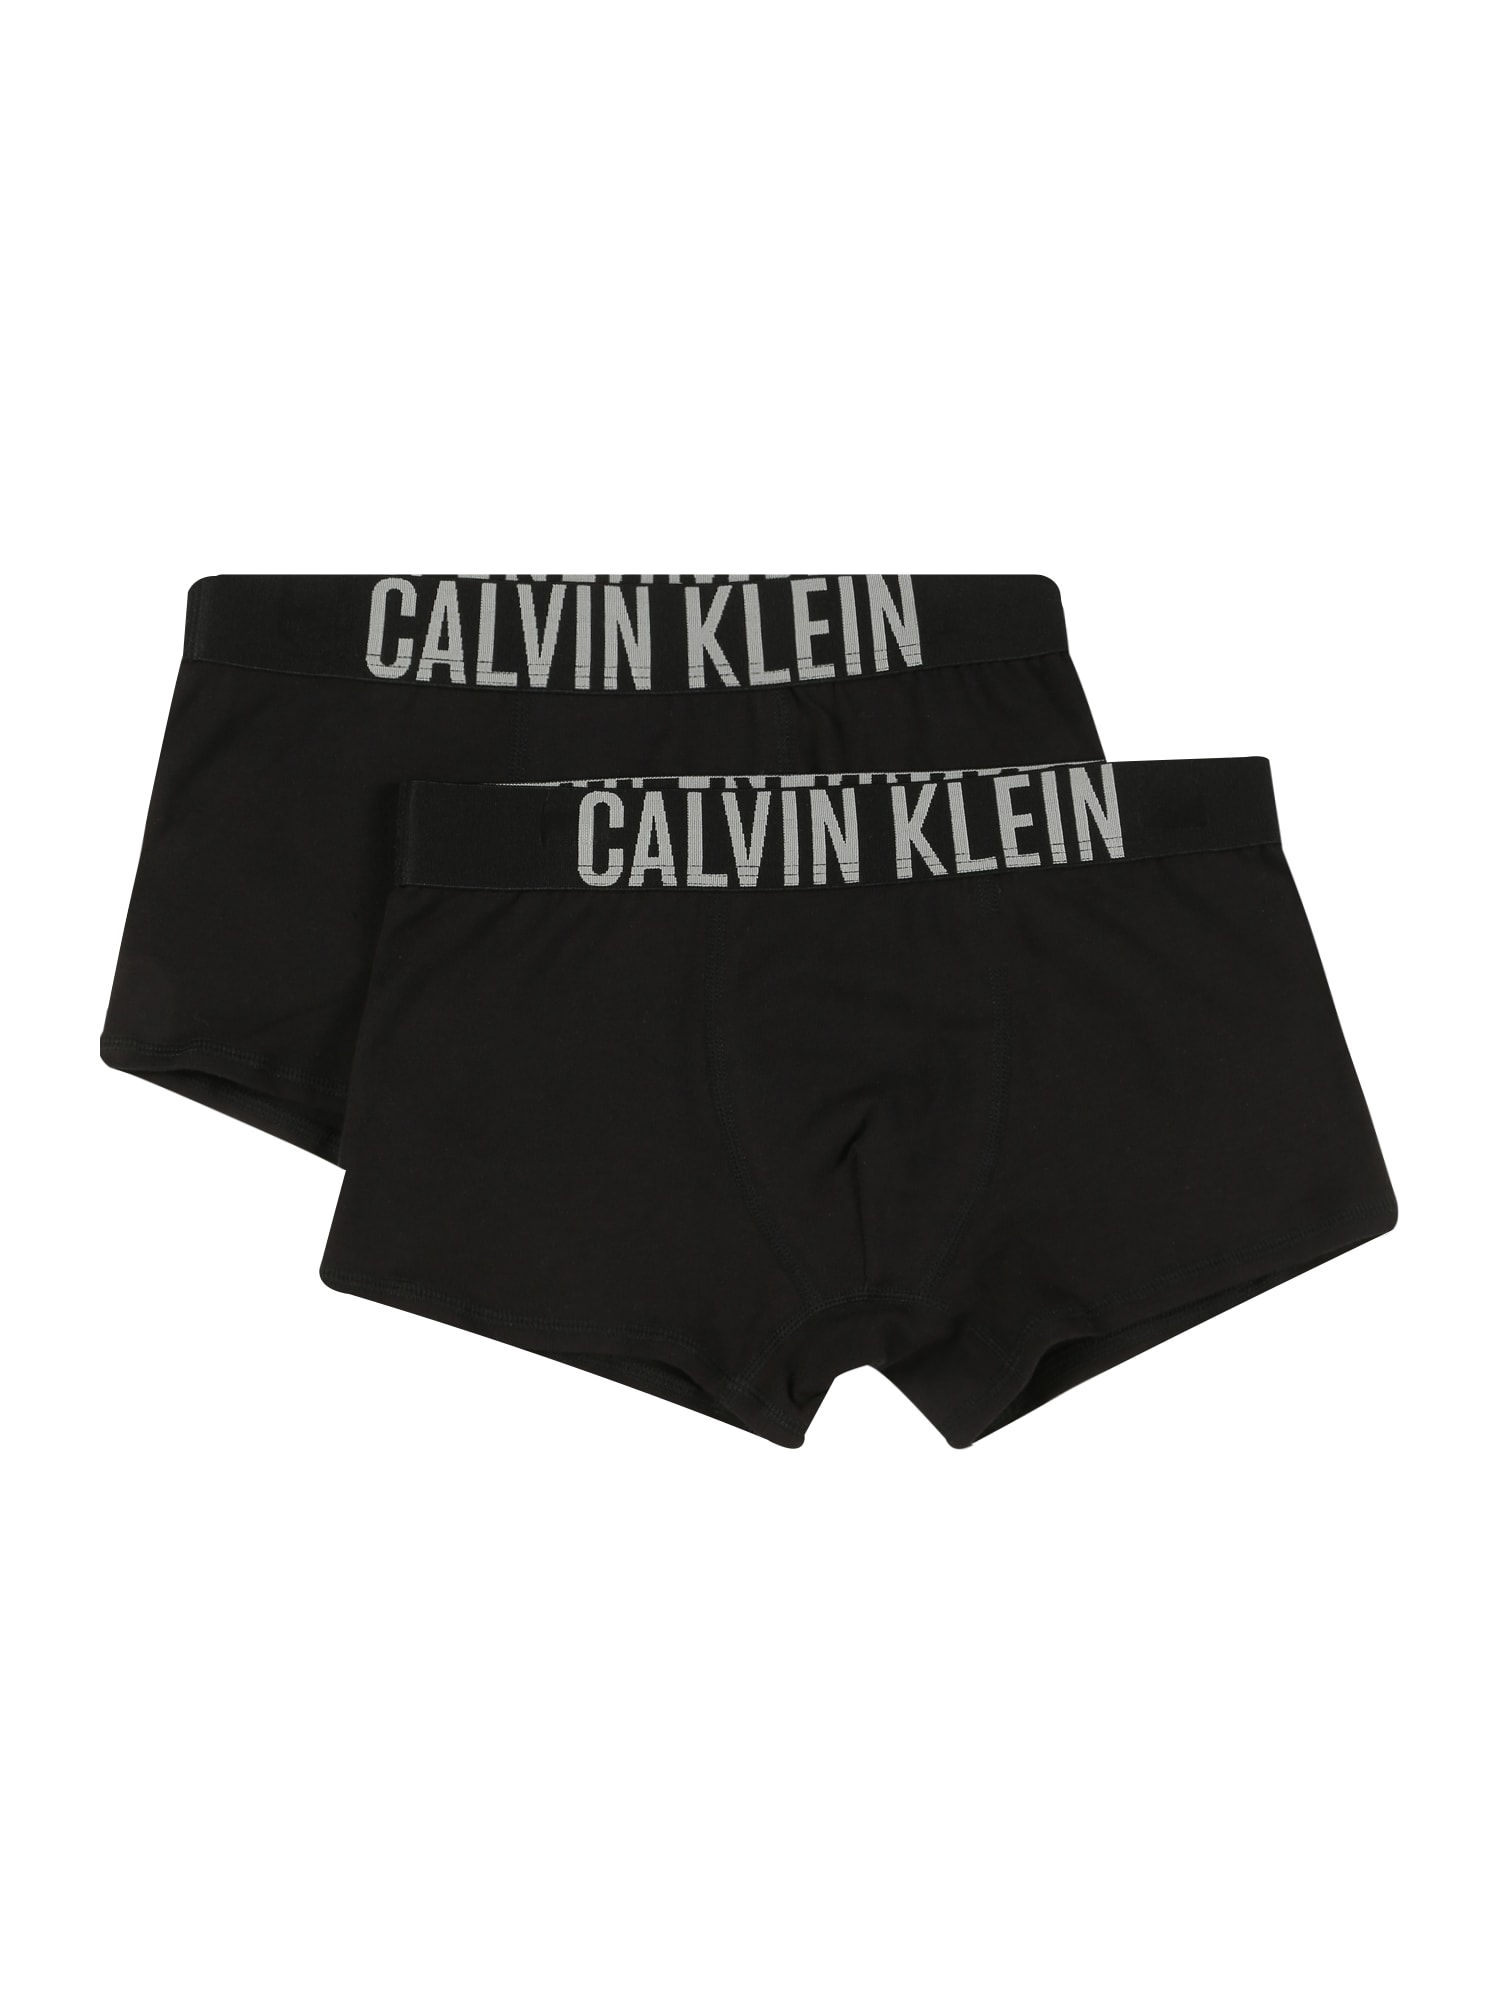 Calvin Klein Underwear Apatinės kelnaitės juoda / balta